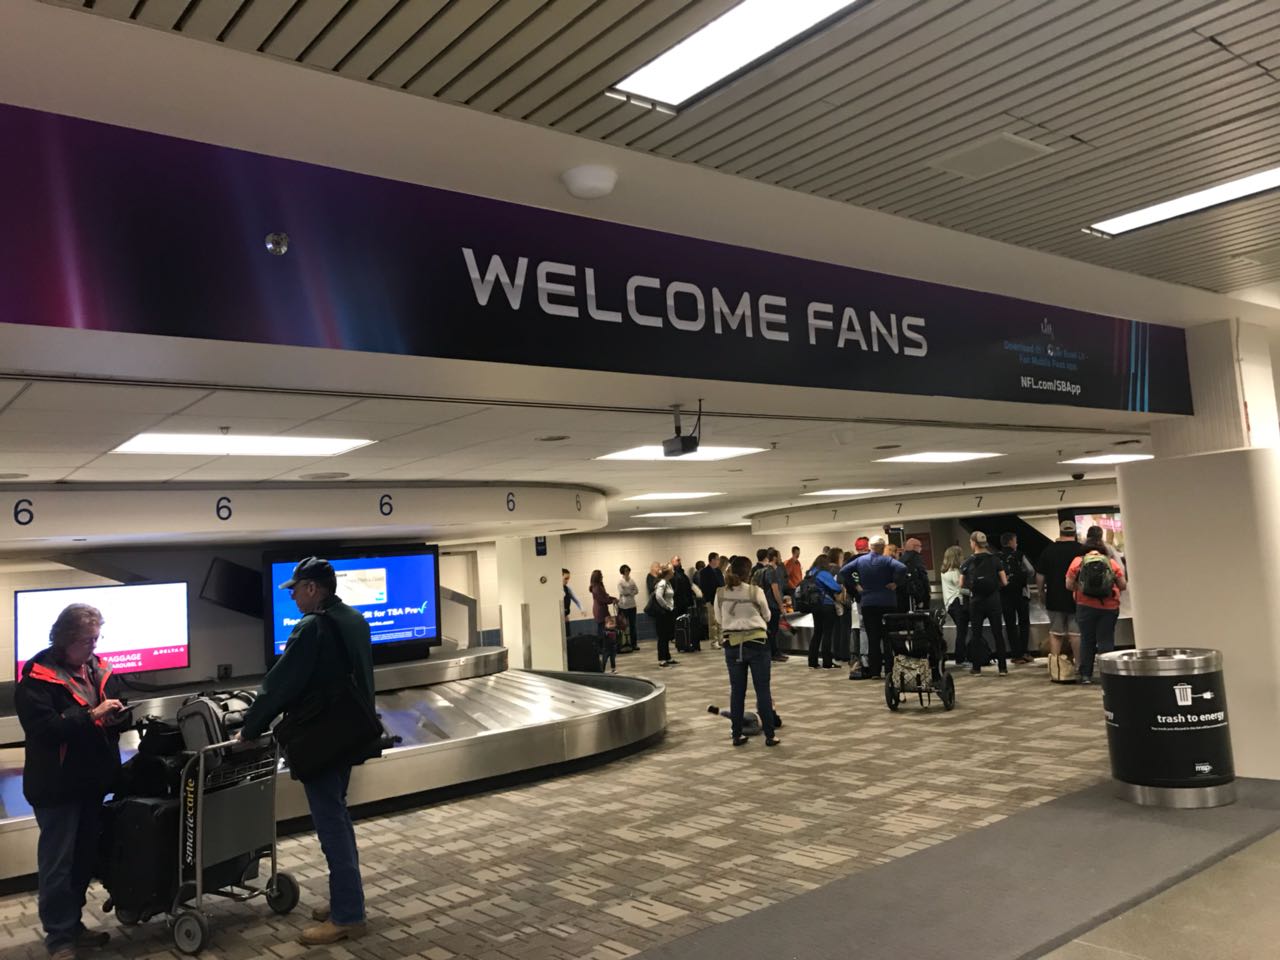 Minneapolis da bienvenida a los fans al Super Bowl LII